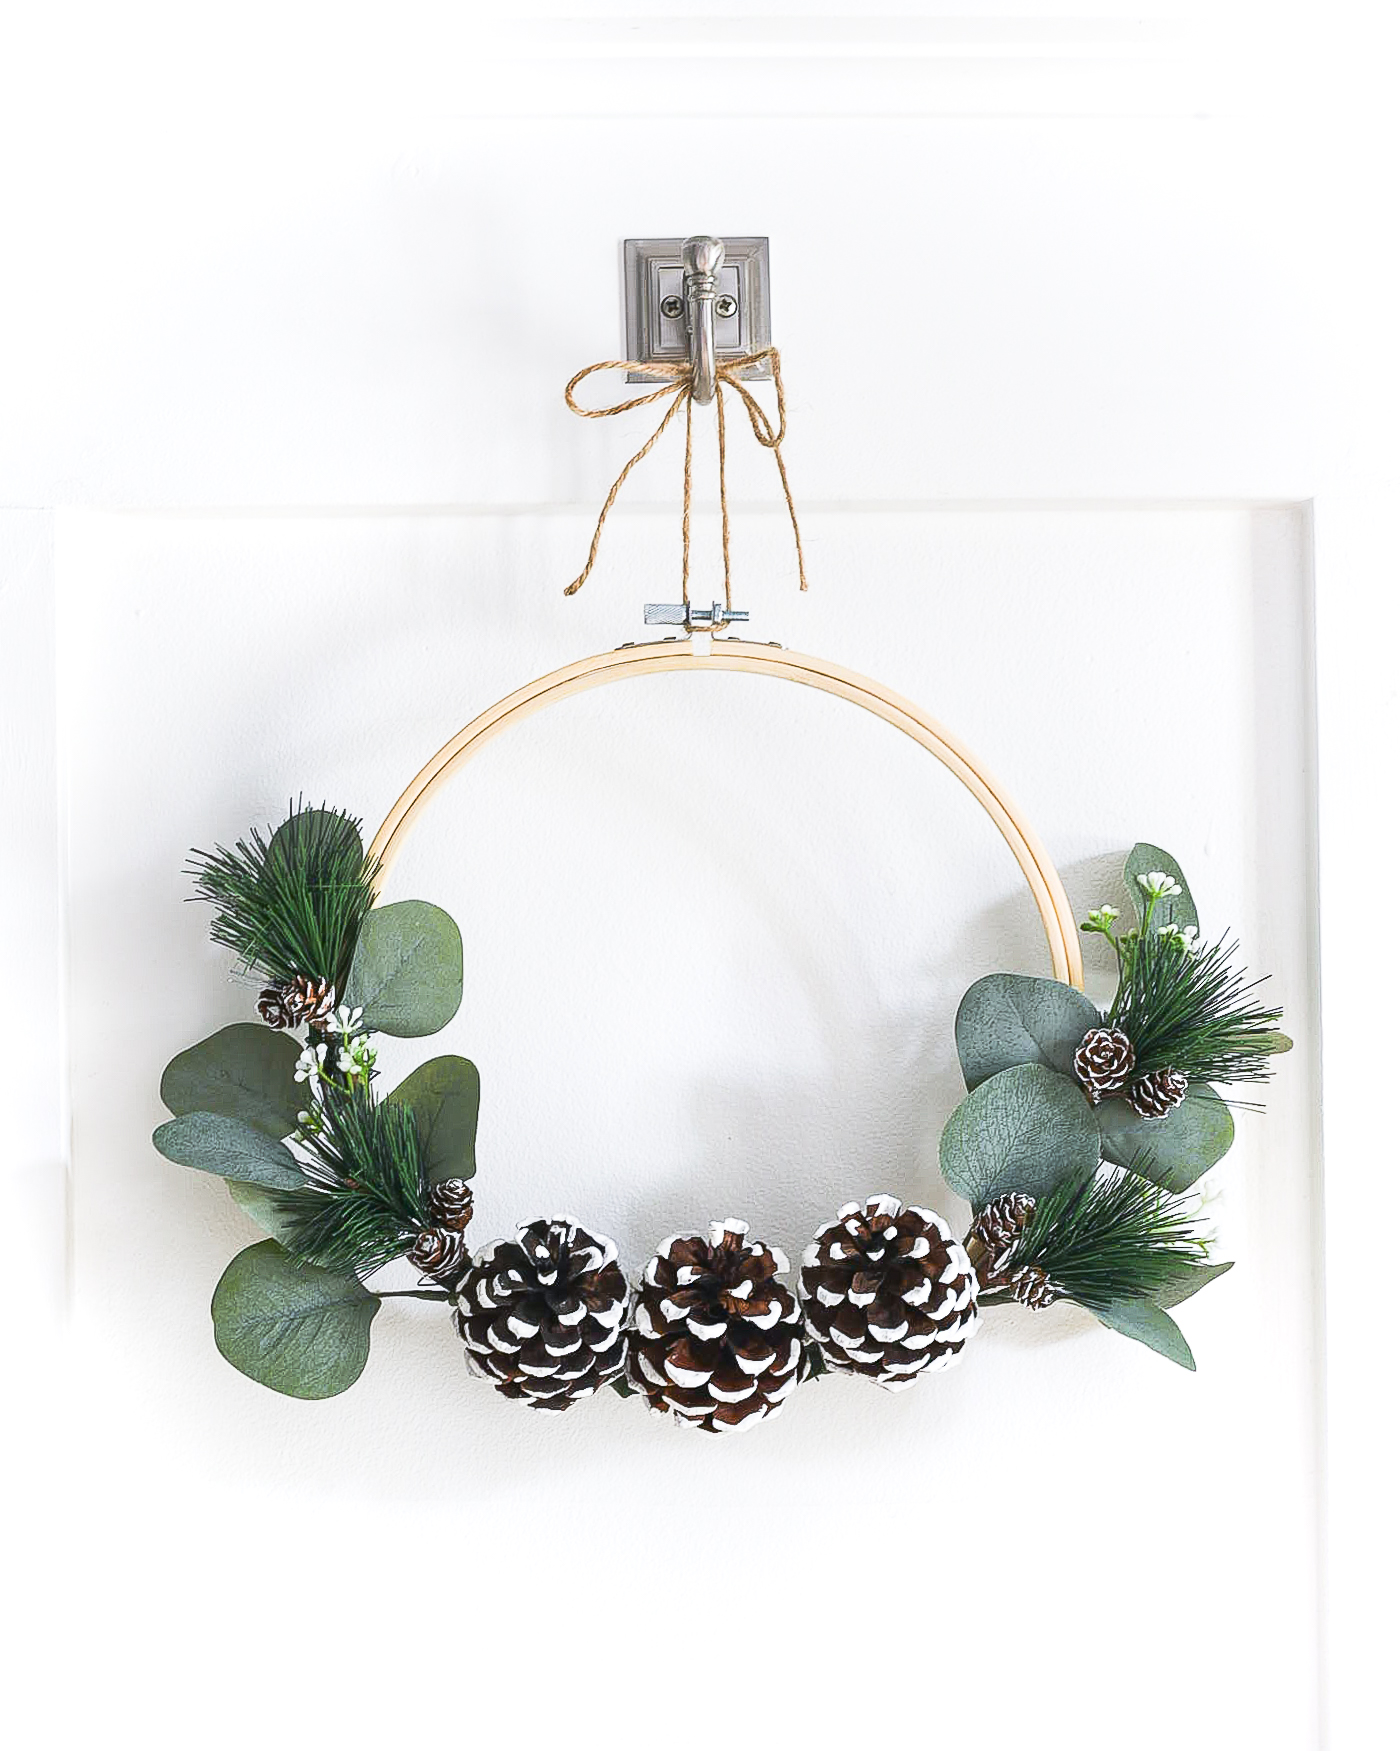 Embroidery Hoop Winter Wreath - Wreath Ideas with Embroidery Hoops - Winter Wreath Crafts - DIY - How To Make Embroidery Hoop Wreath